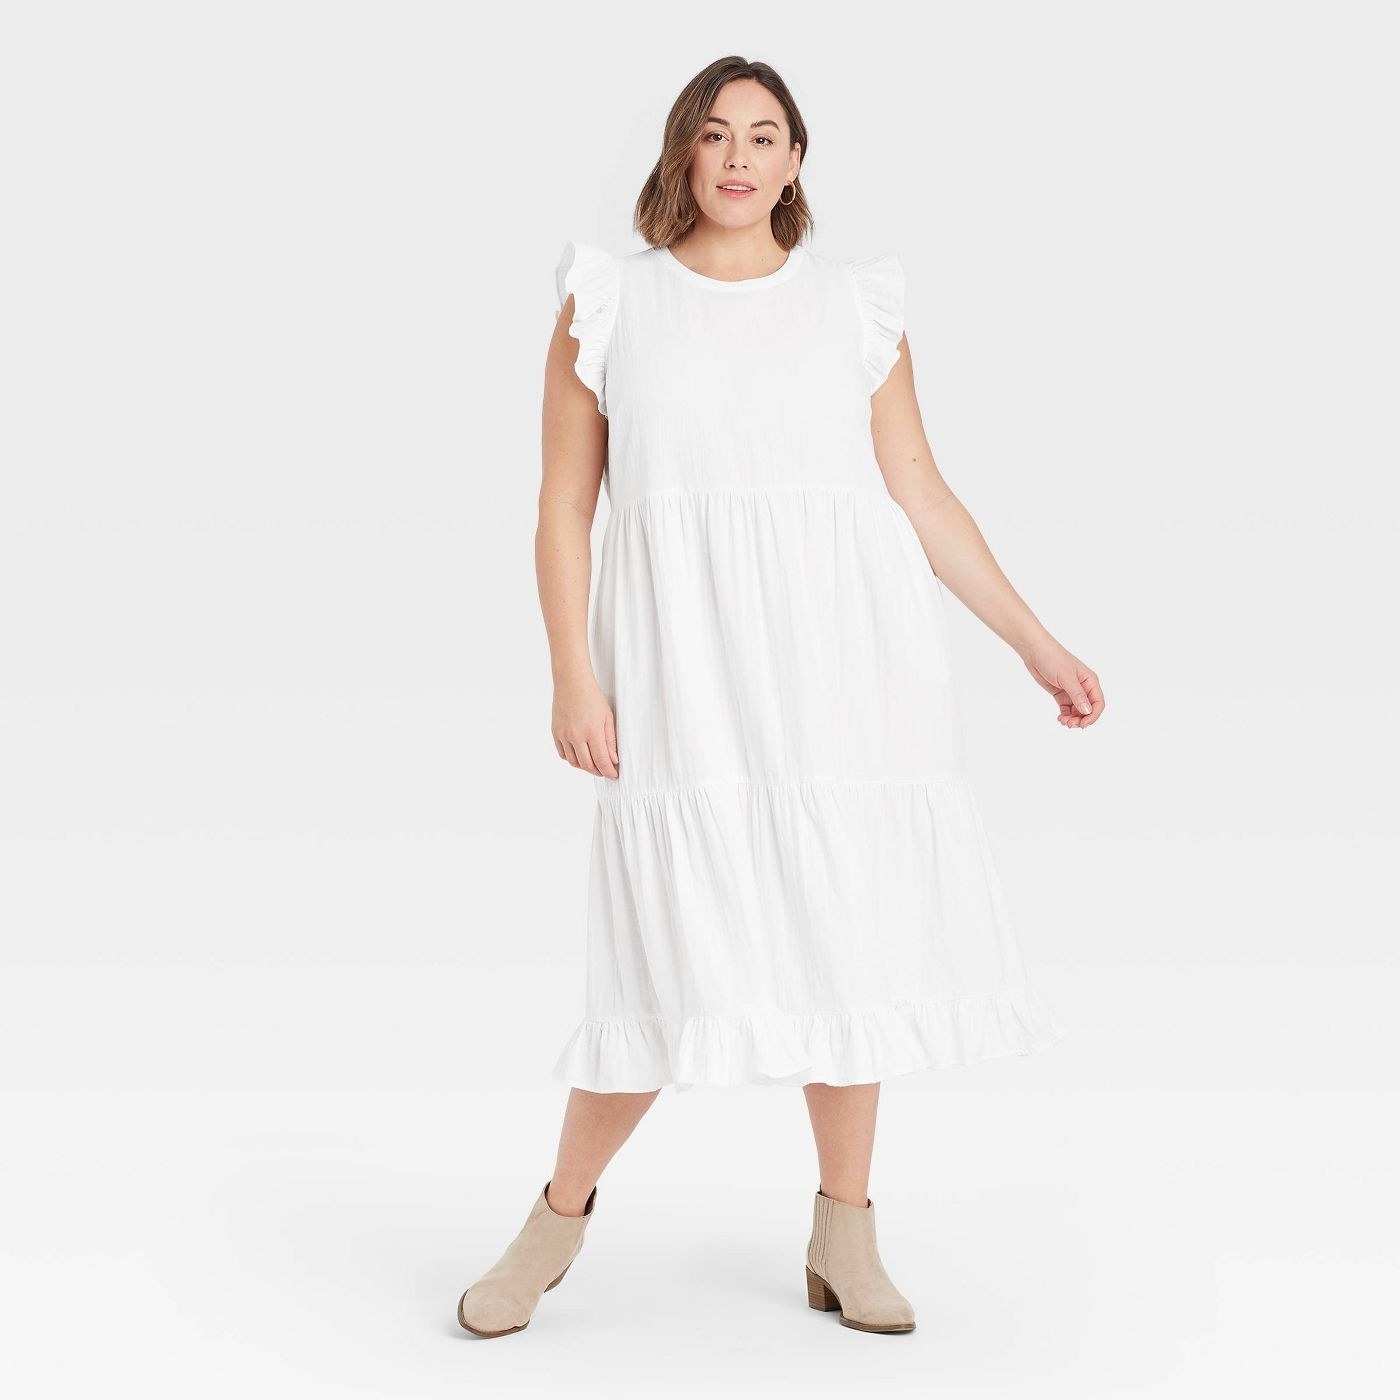 Model in white sleeveless tiered dress